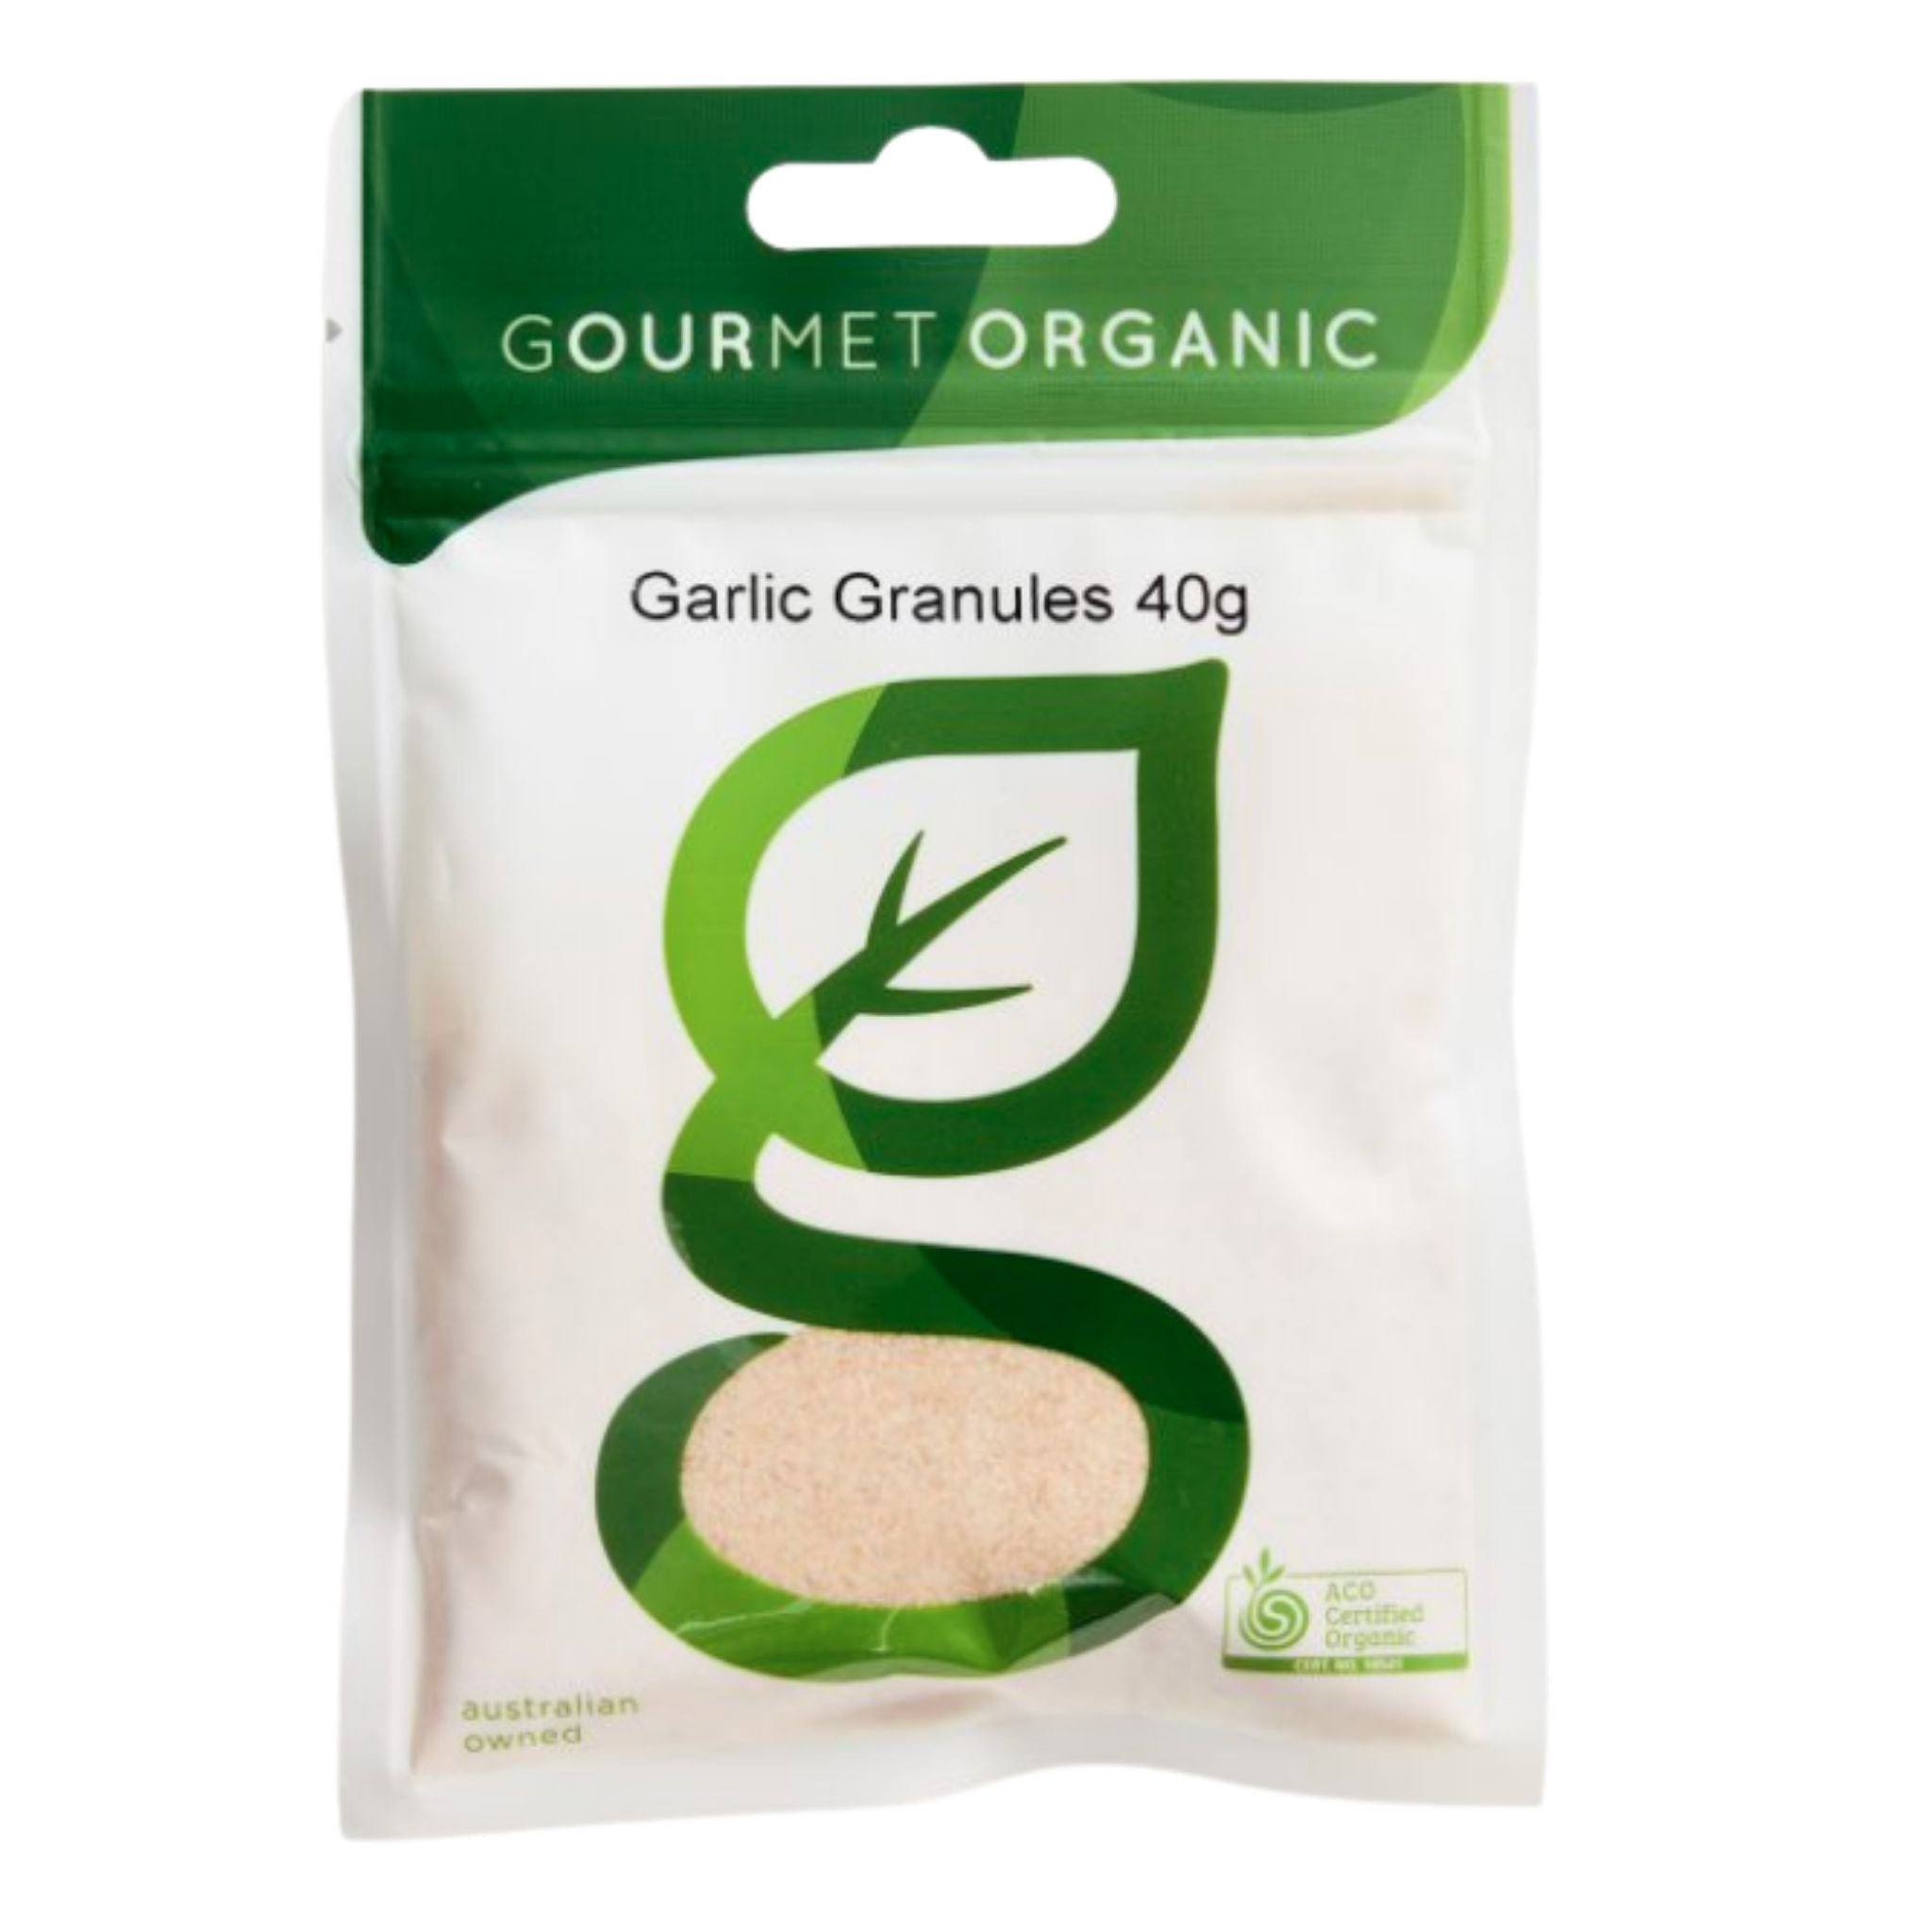 Garlic Granules (Organic) - Gourmet Organic. 40gr